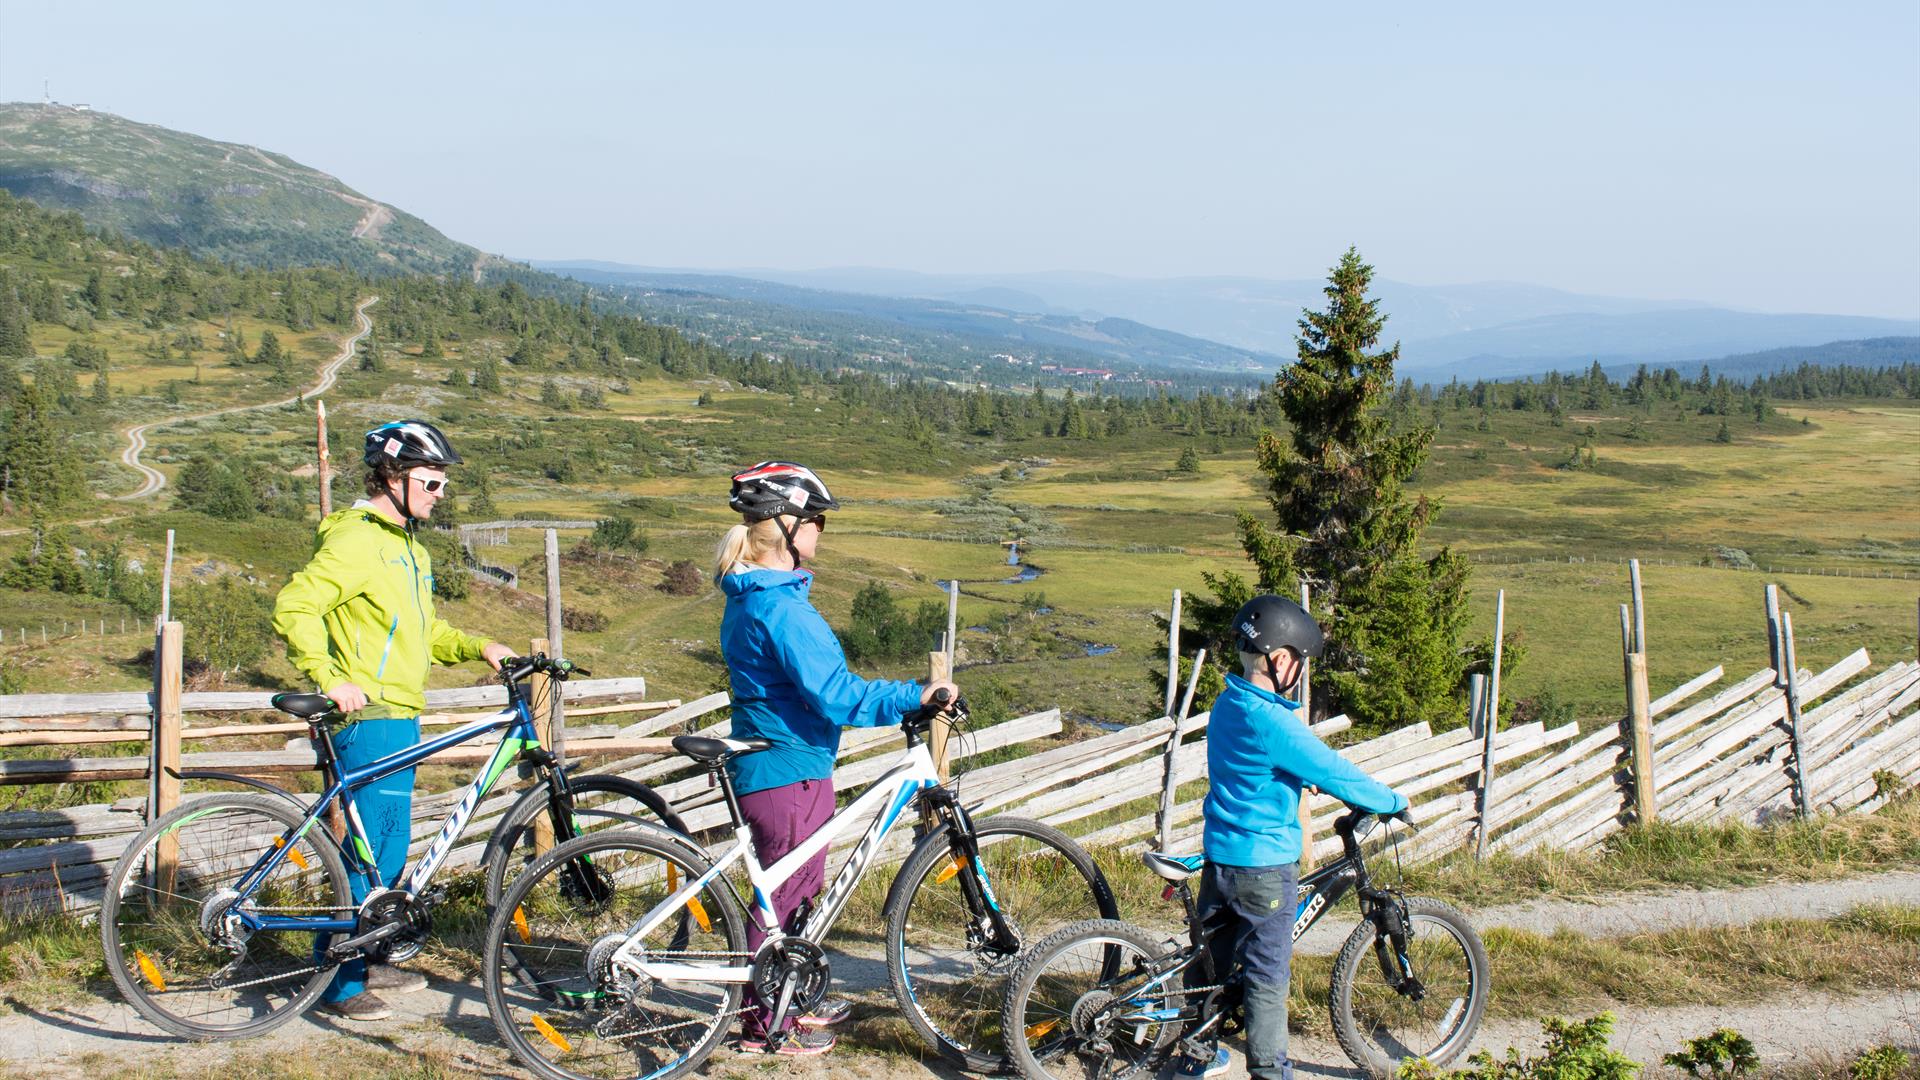 A family biking in the mountain farm landscape.